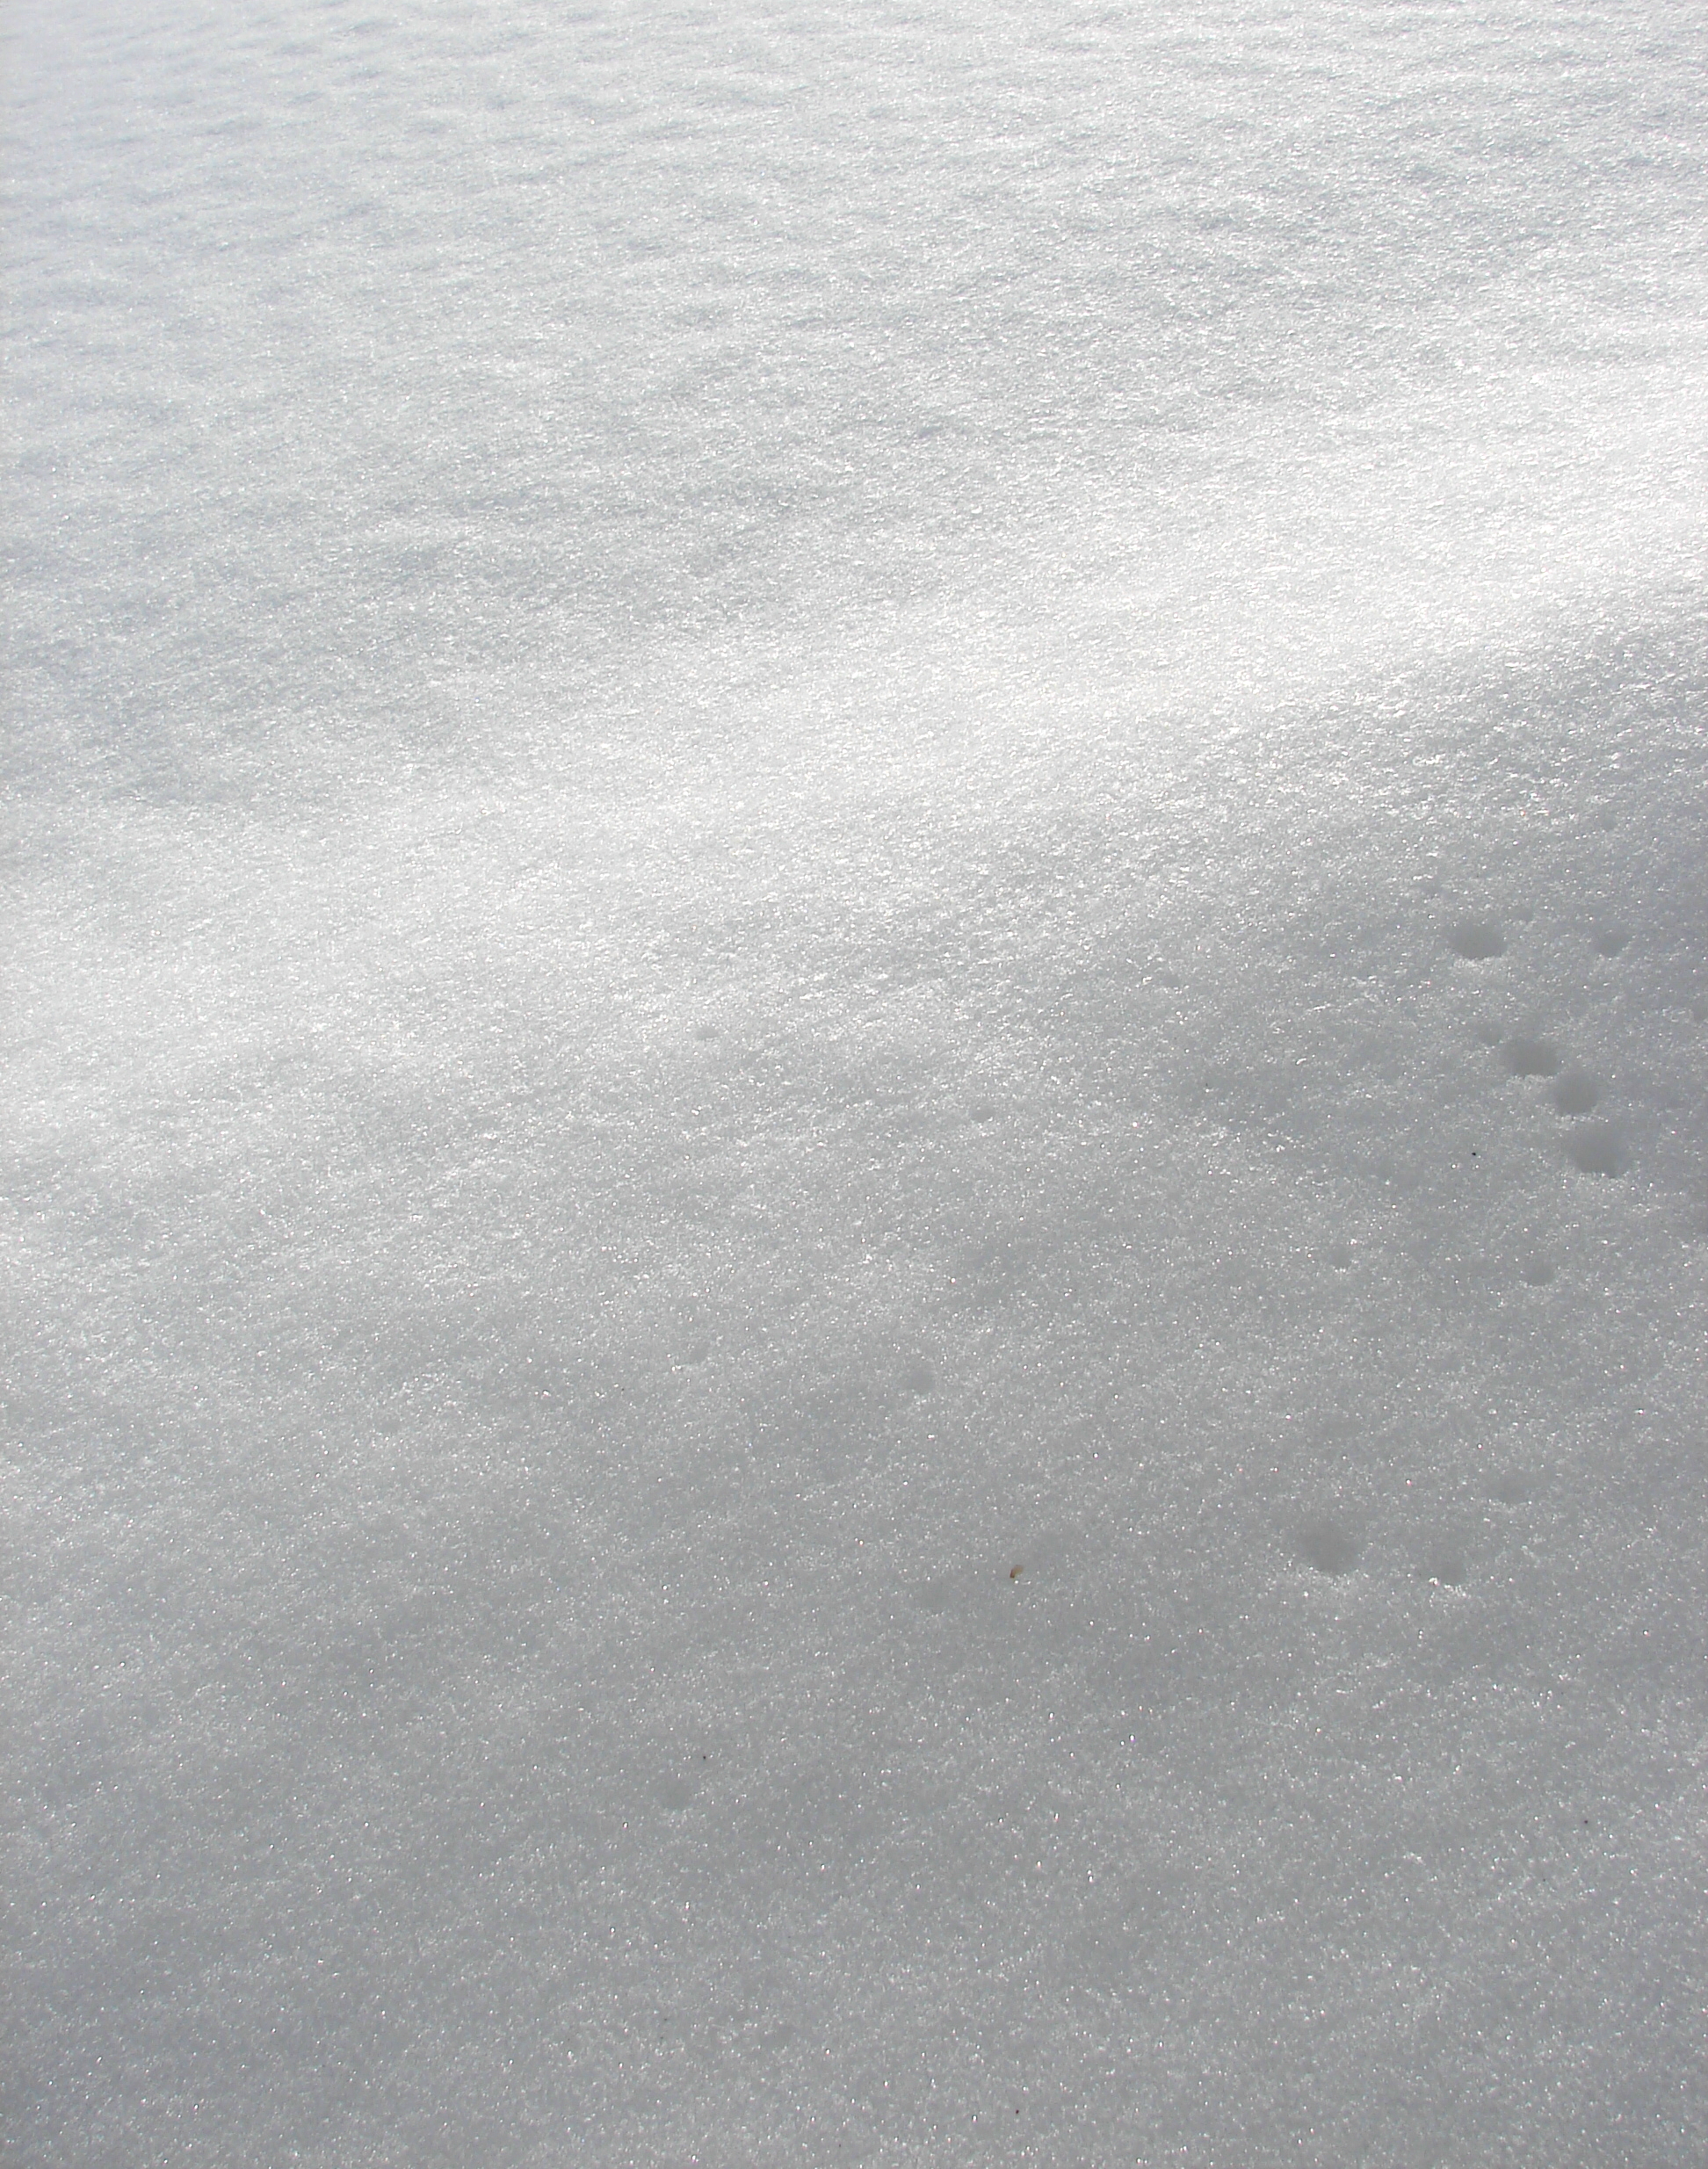 Winter Icy Snow Texture 1